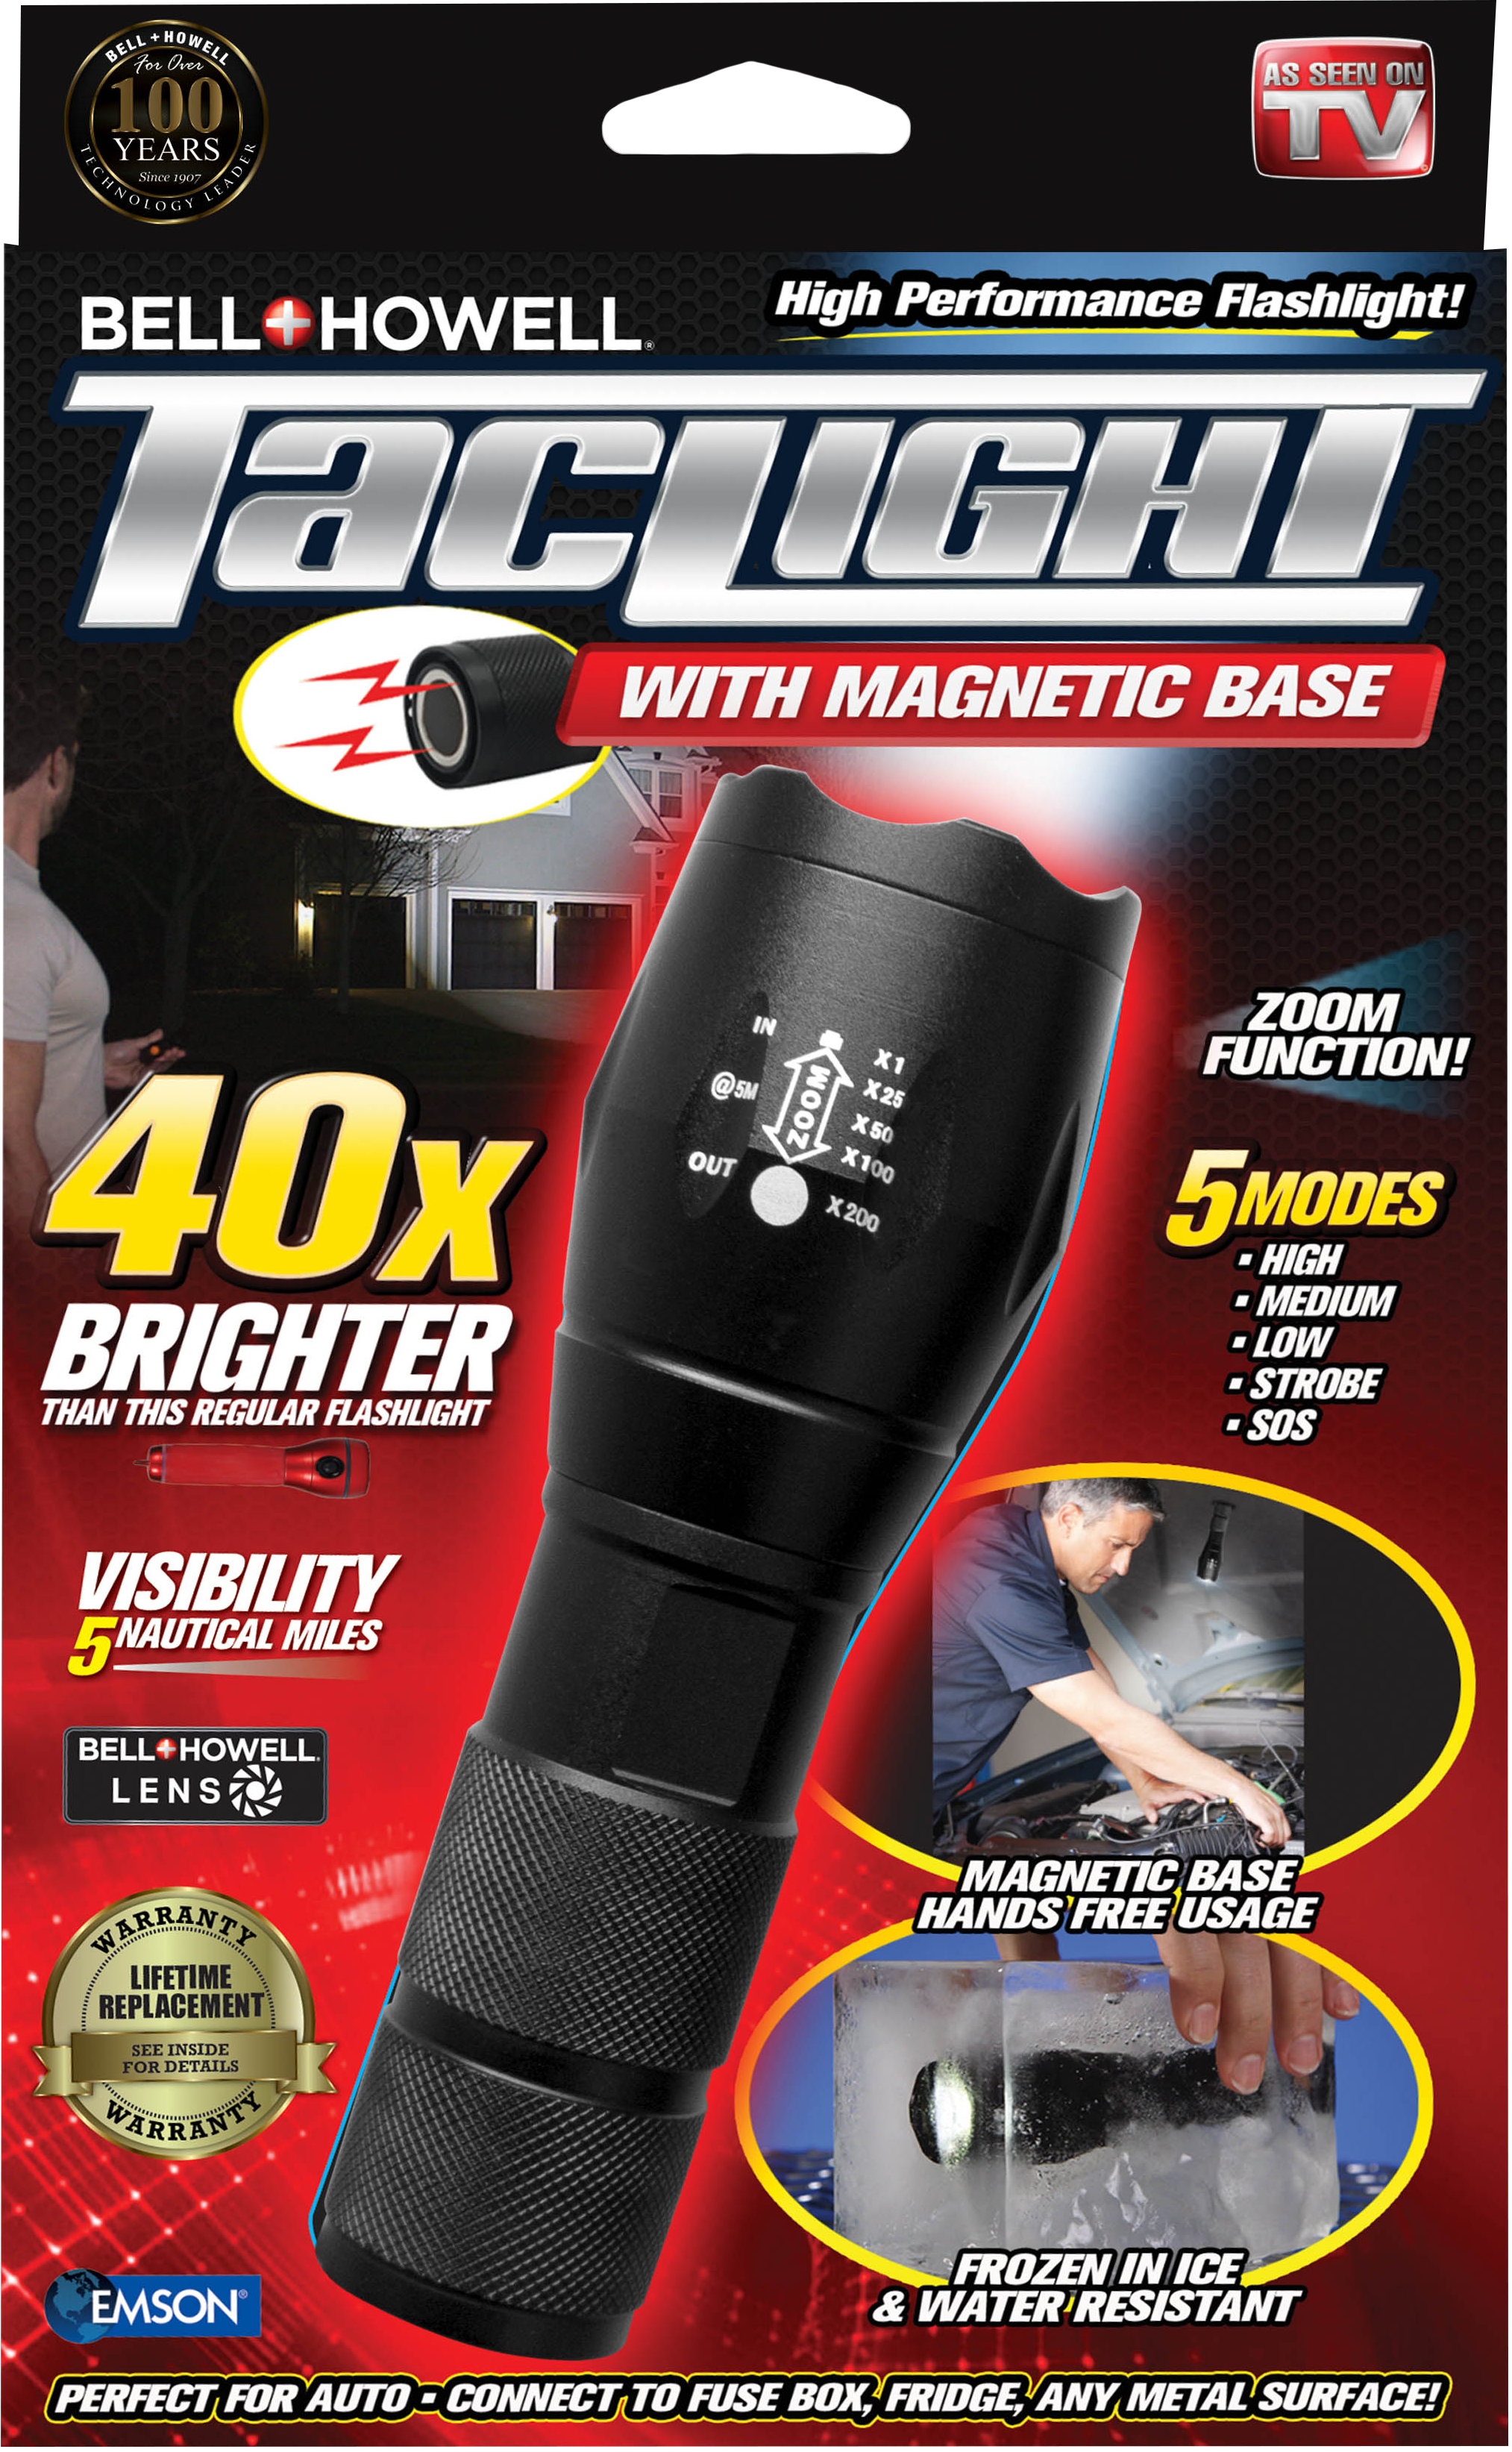 Taclight Lantern with Magnetic base - 300 Lumens